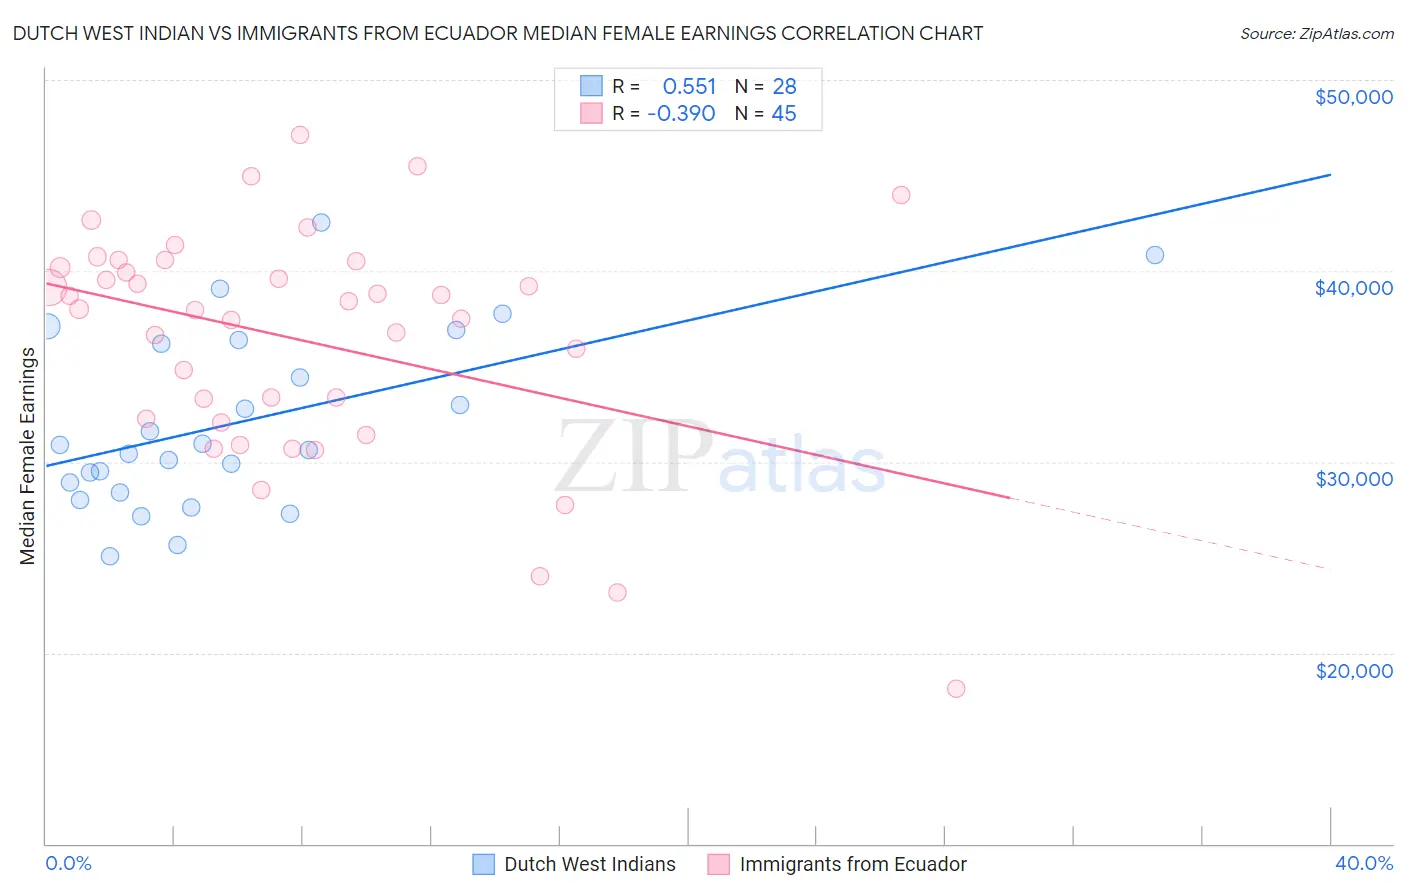 Dutch West Indian vs Immigrants from Ecuador Median Female Earnings